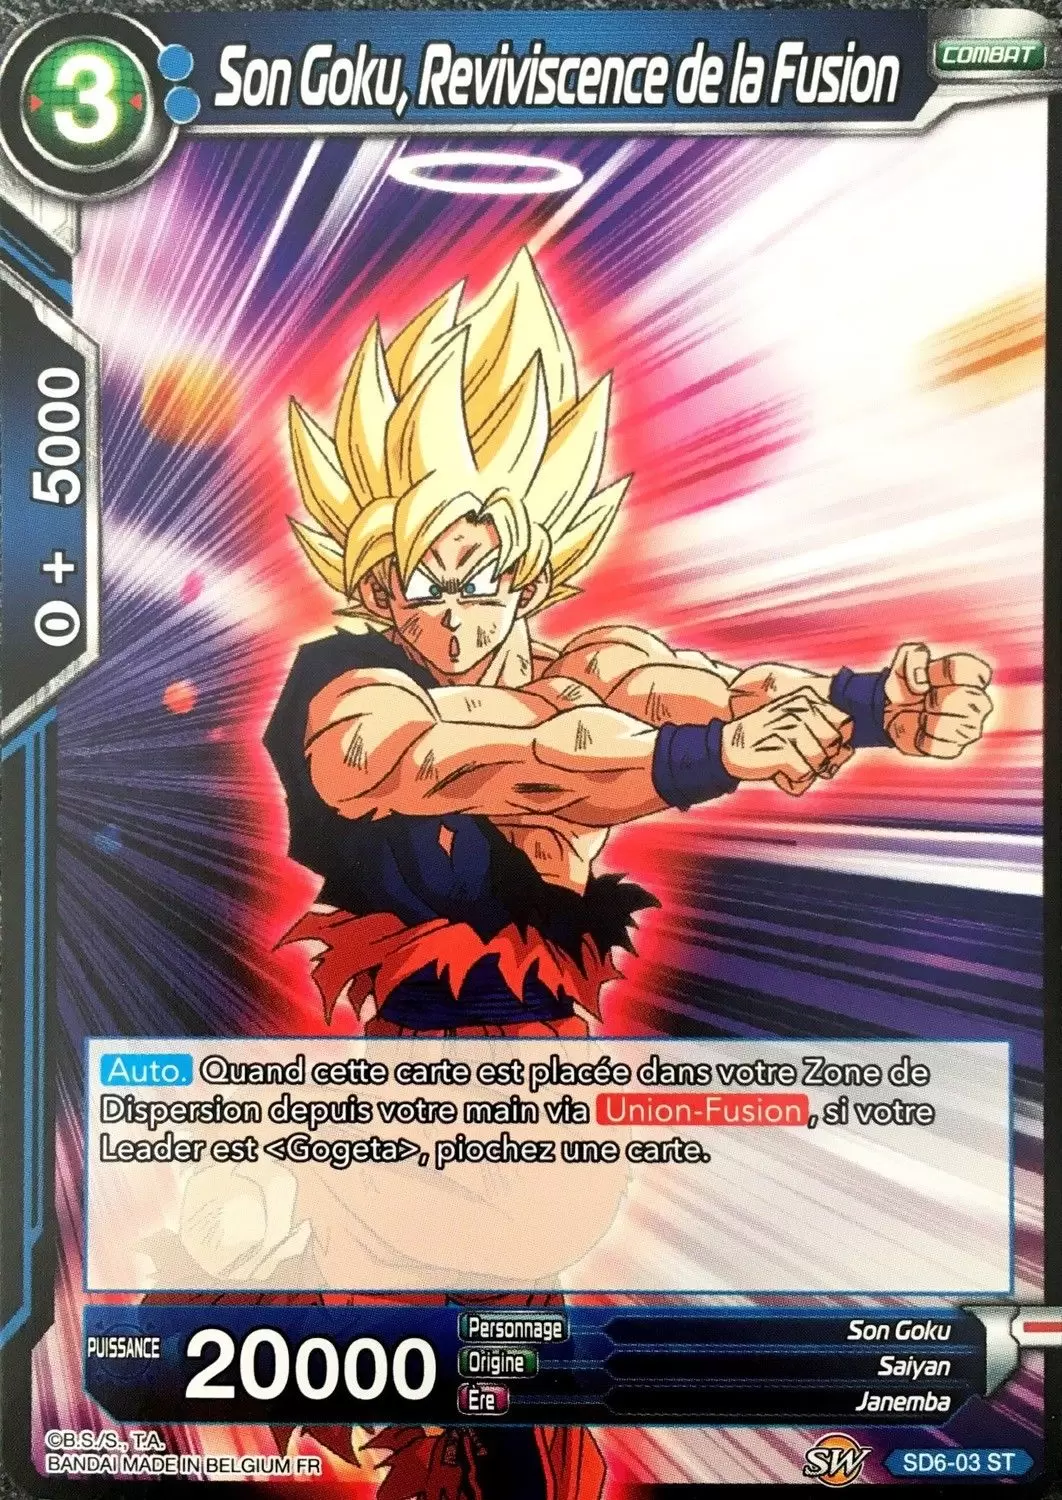 Resurrected Fusion [SD6] - Son Goku, Reviviscence de la Fusion